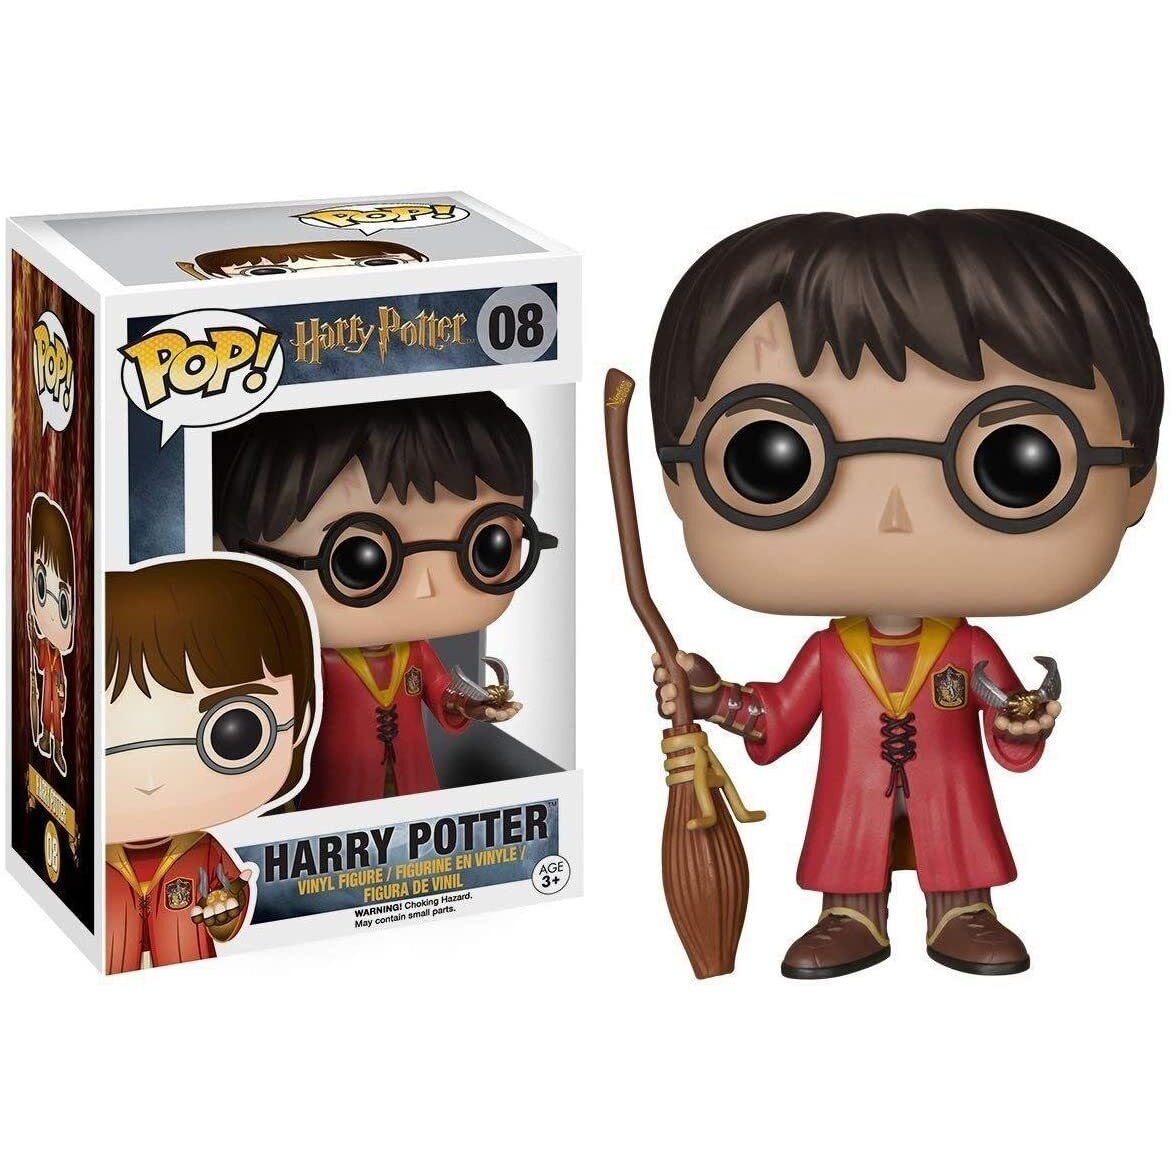 Harry Potter Funko POP! 08 Harry Potter Harry Potter nerd-pug